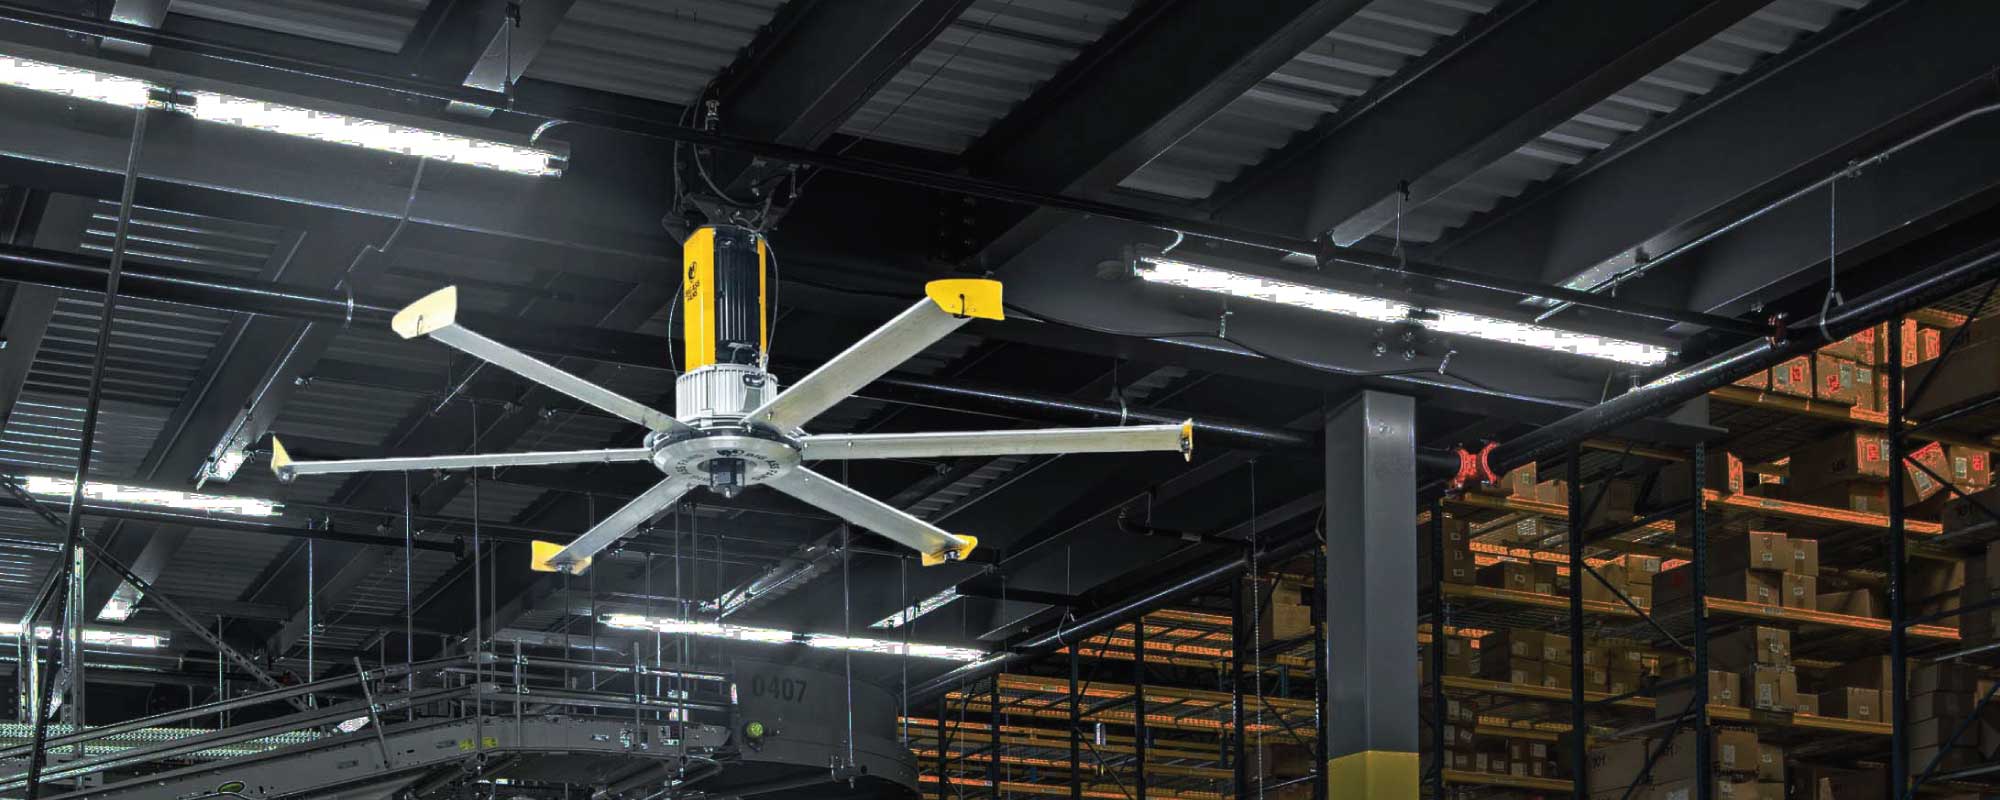 warehouse ceiling fans